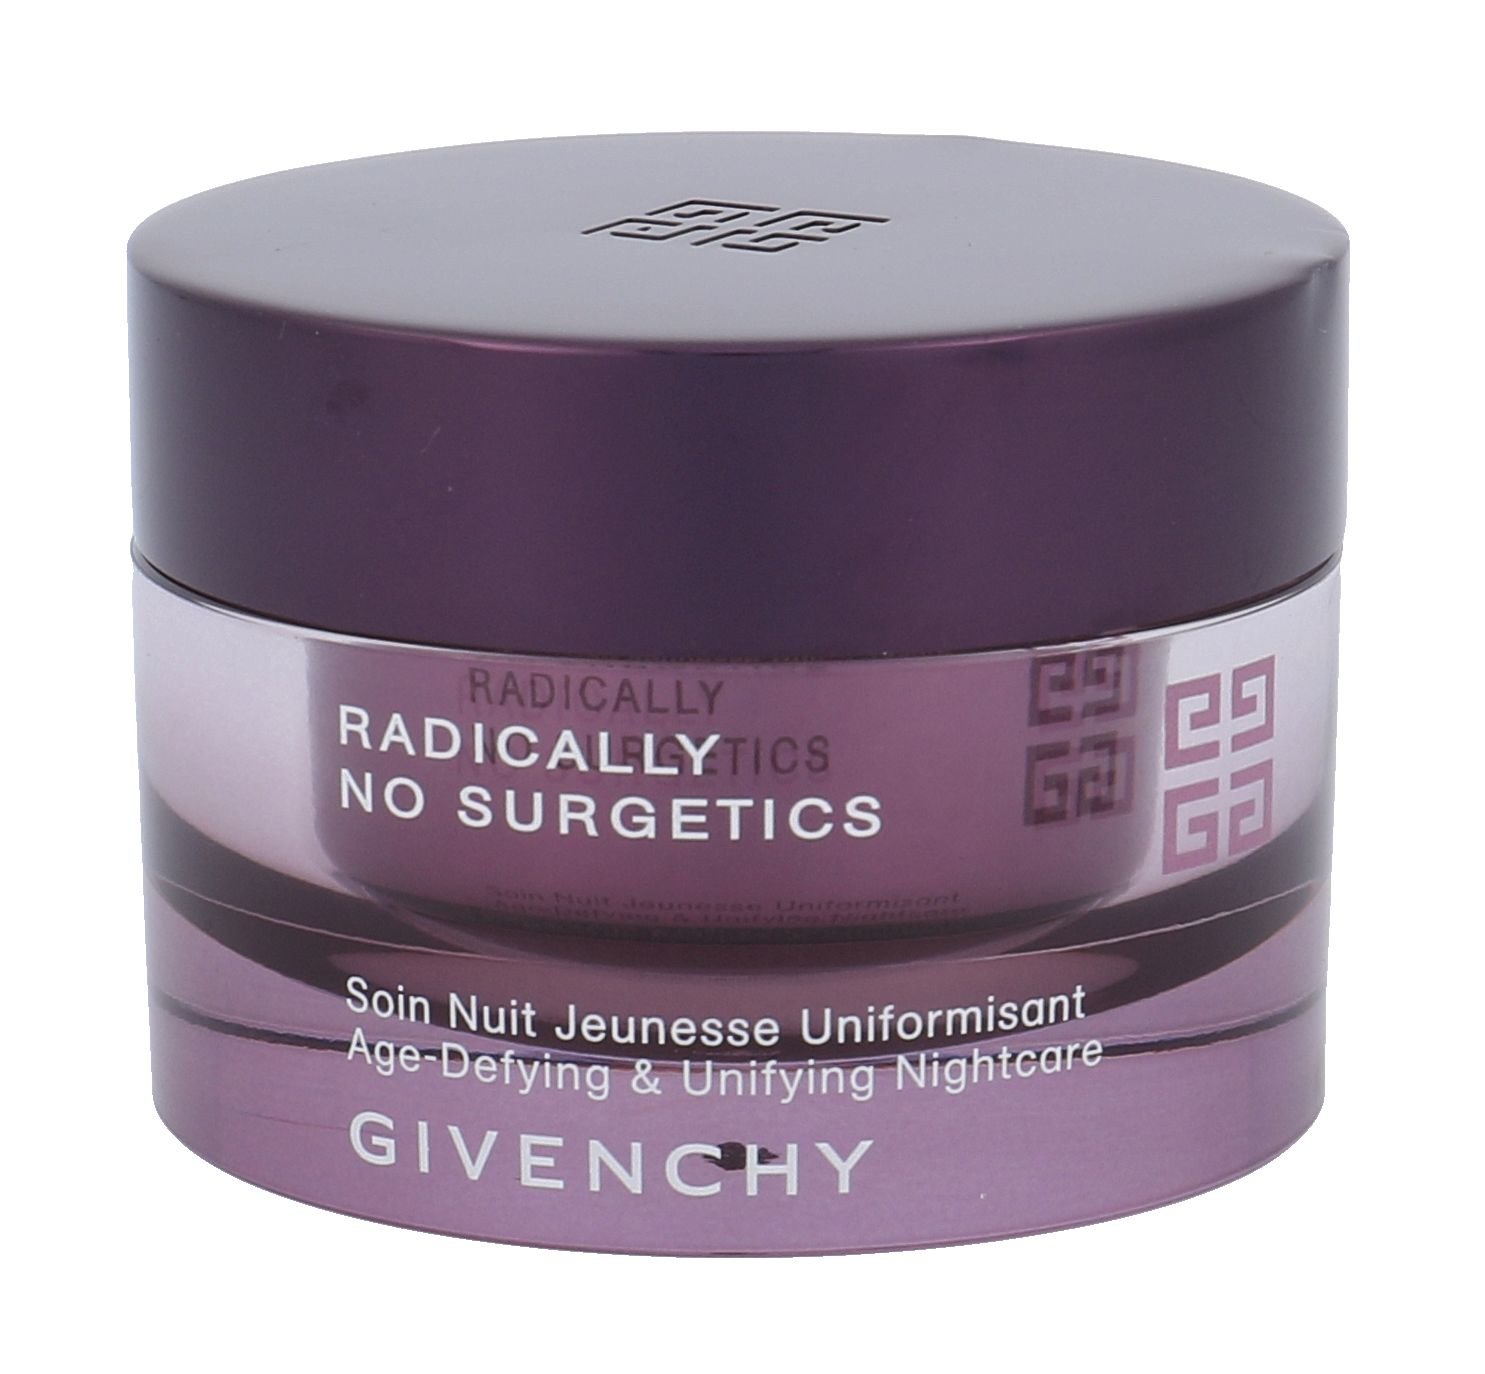 Givenchy Radically No Surgetics Age-Defying Nightcare